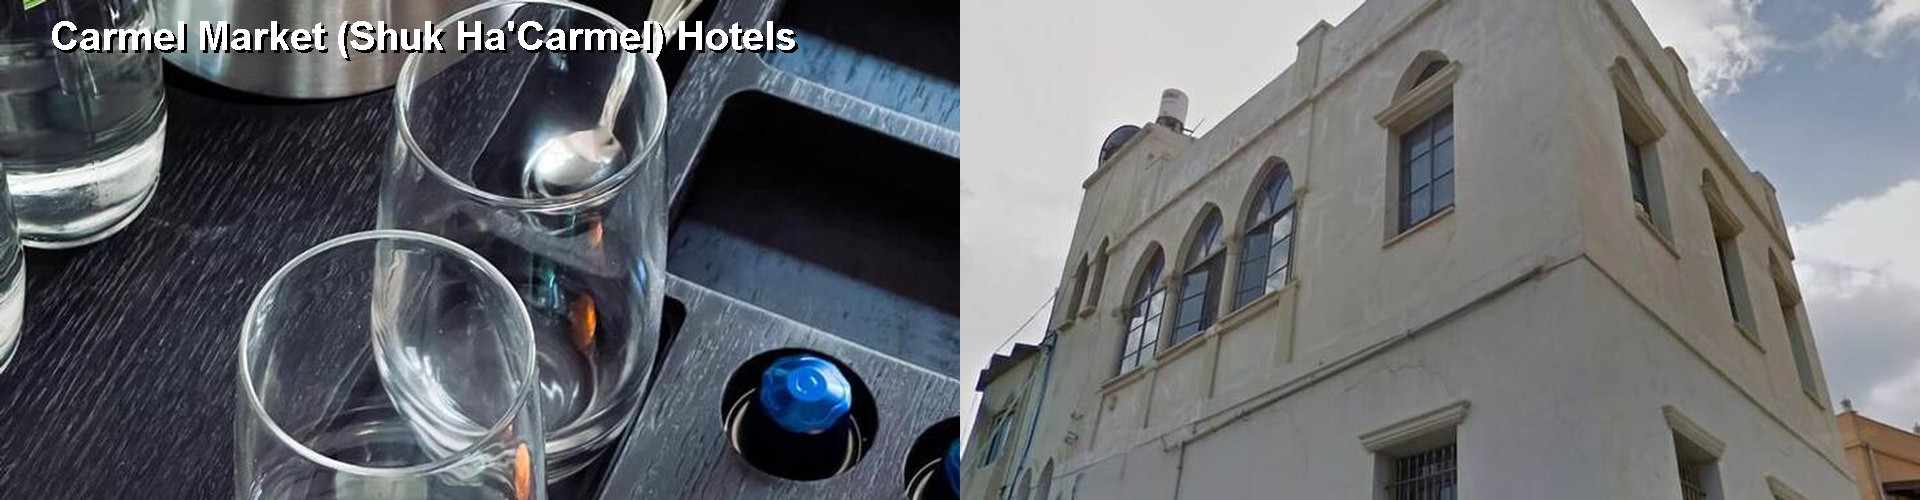 5 Best Hotels near Carmel Market (Shuk Ha'Carmel)